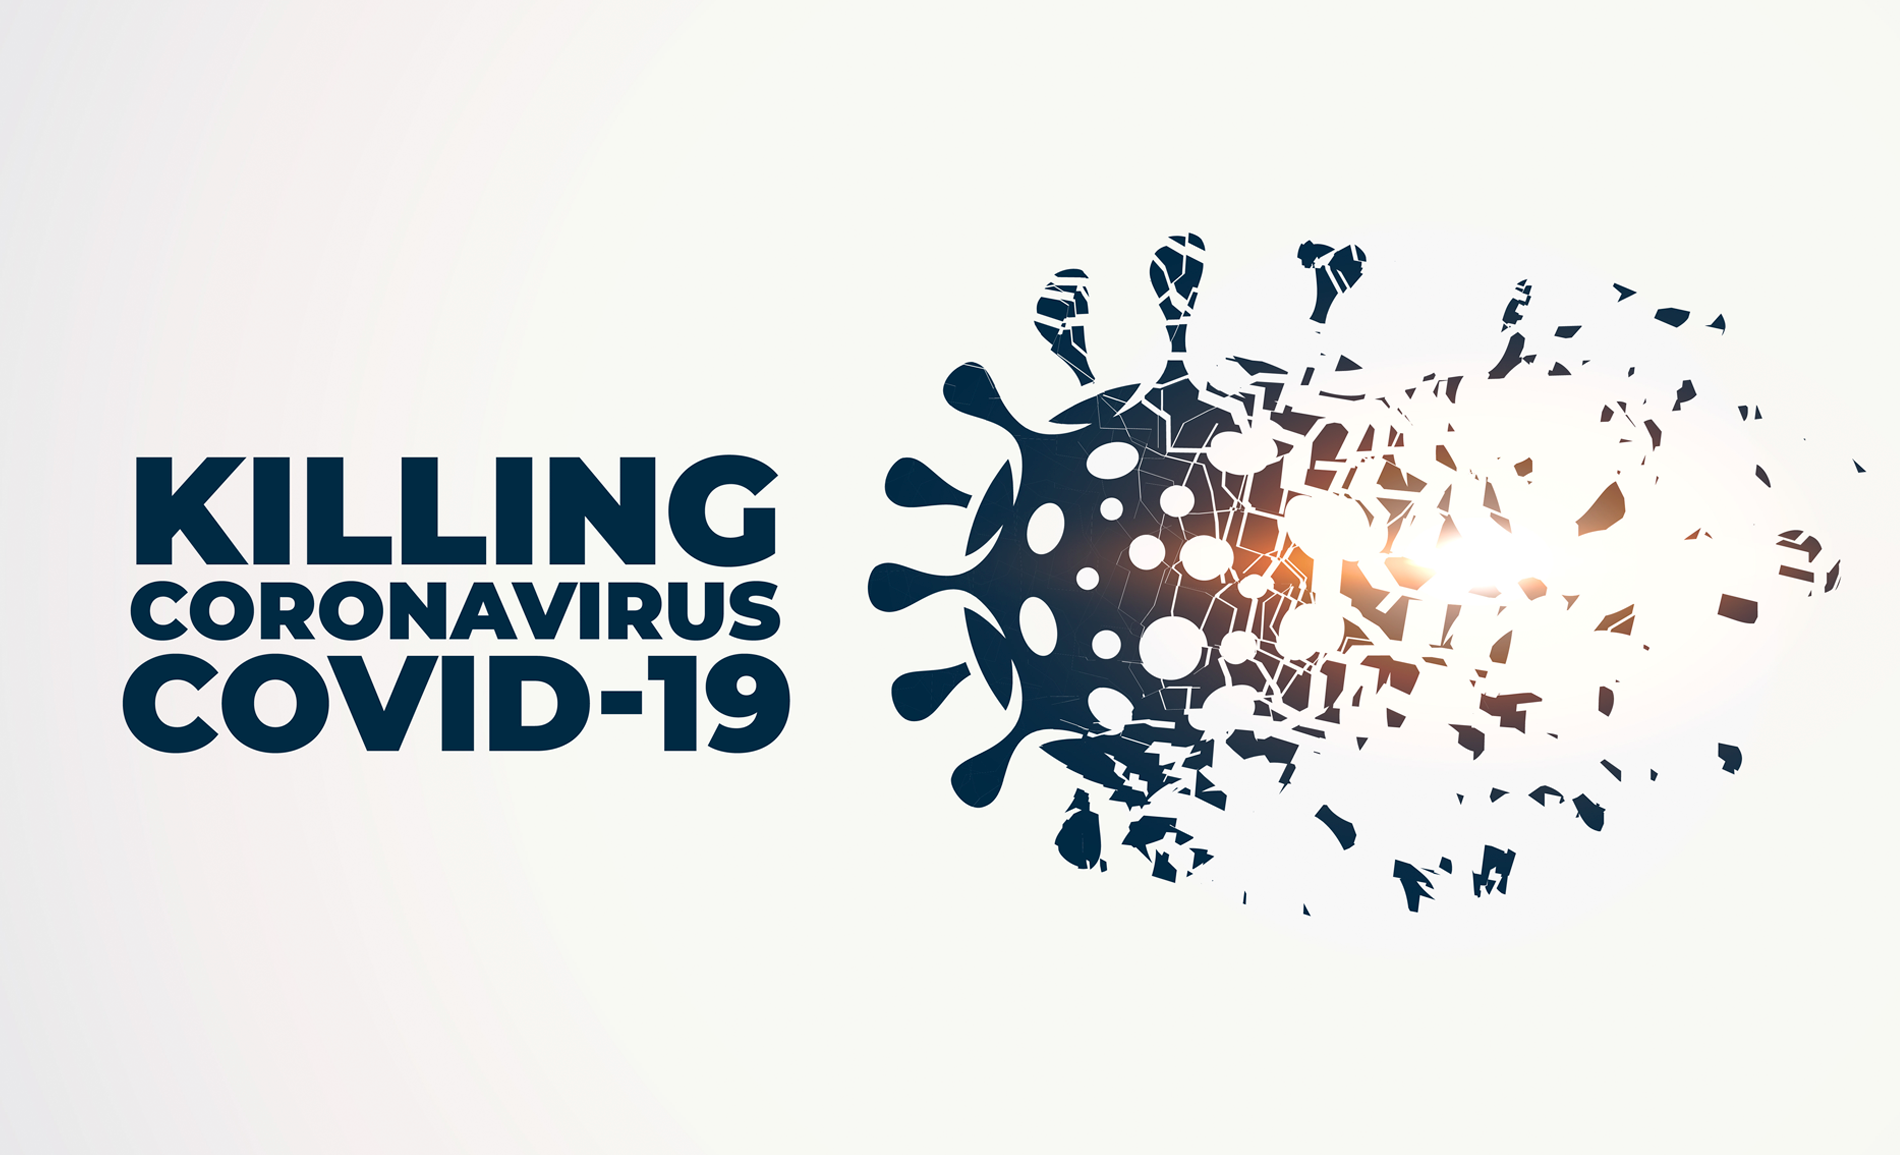 Coronavirus Breaking News: Briotech HOCl Inactivates SARS-CoV-2 / COVID-19